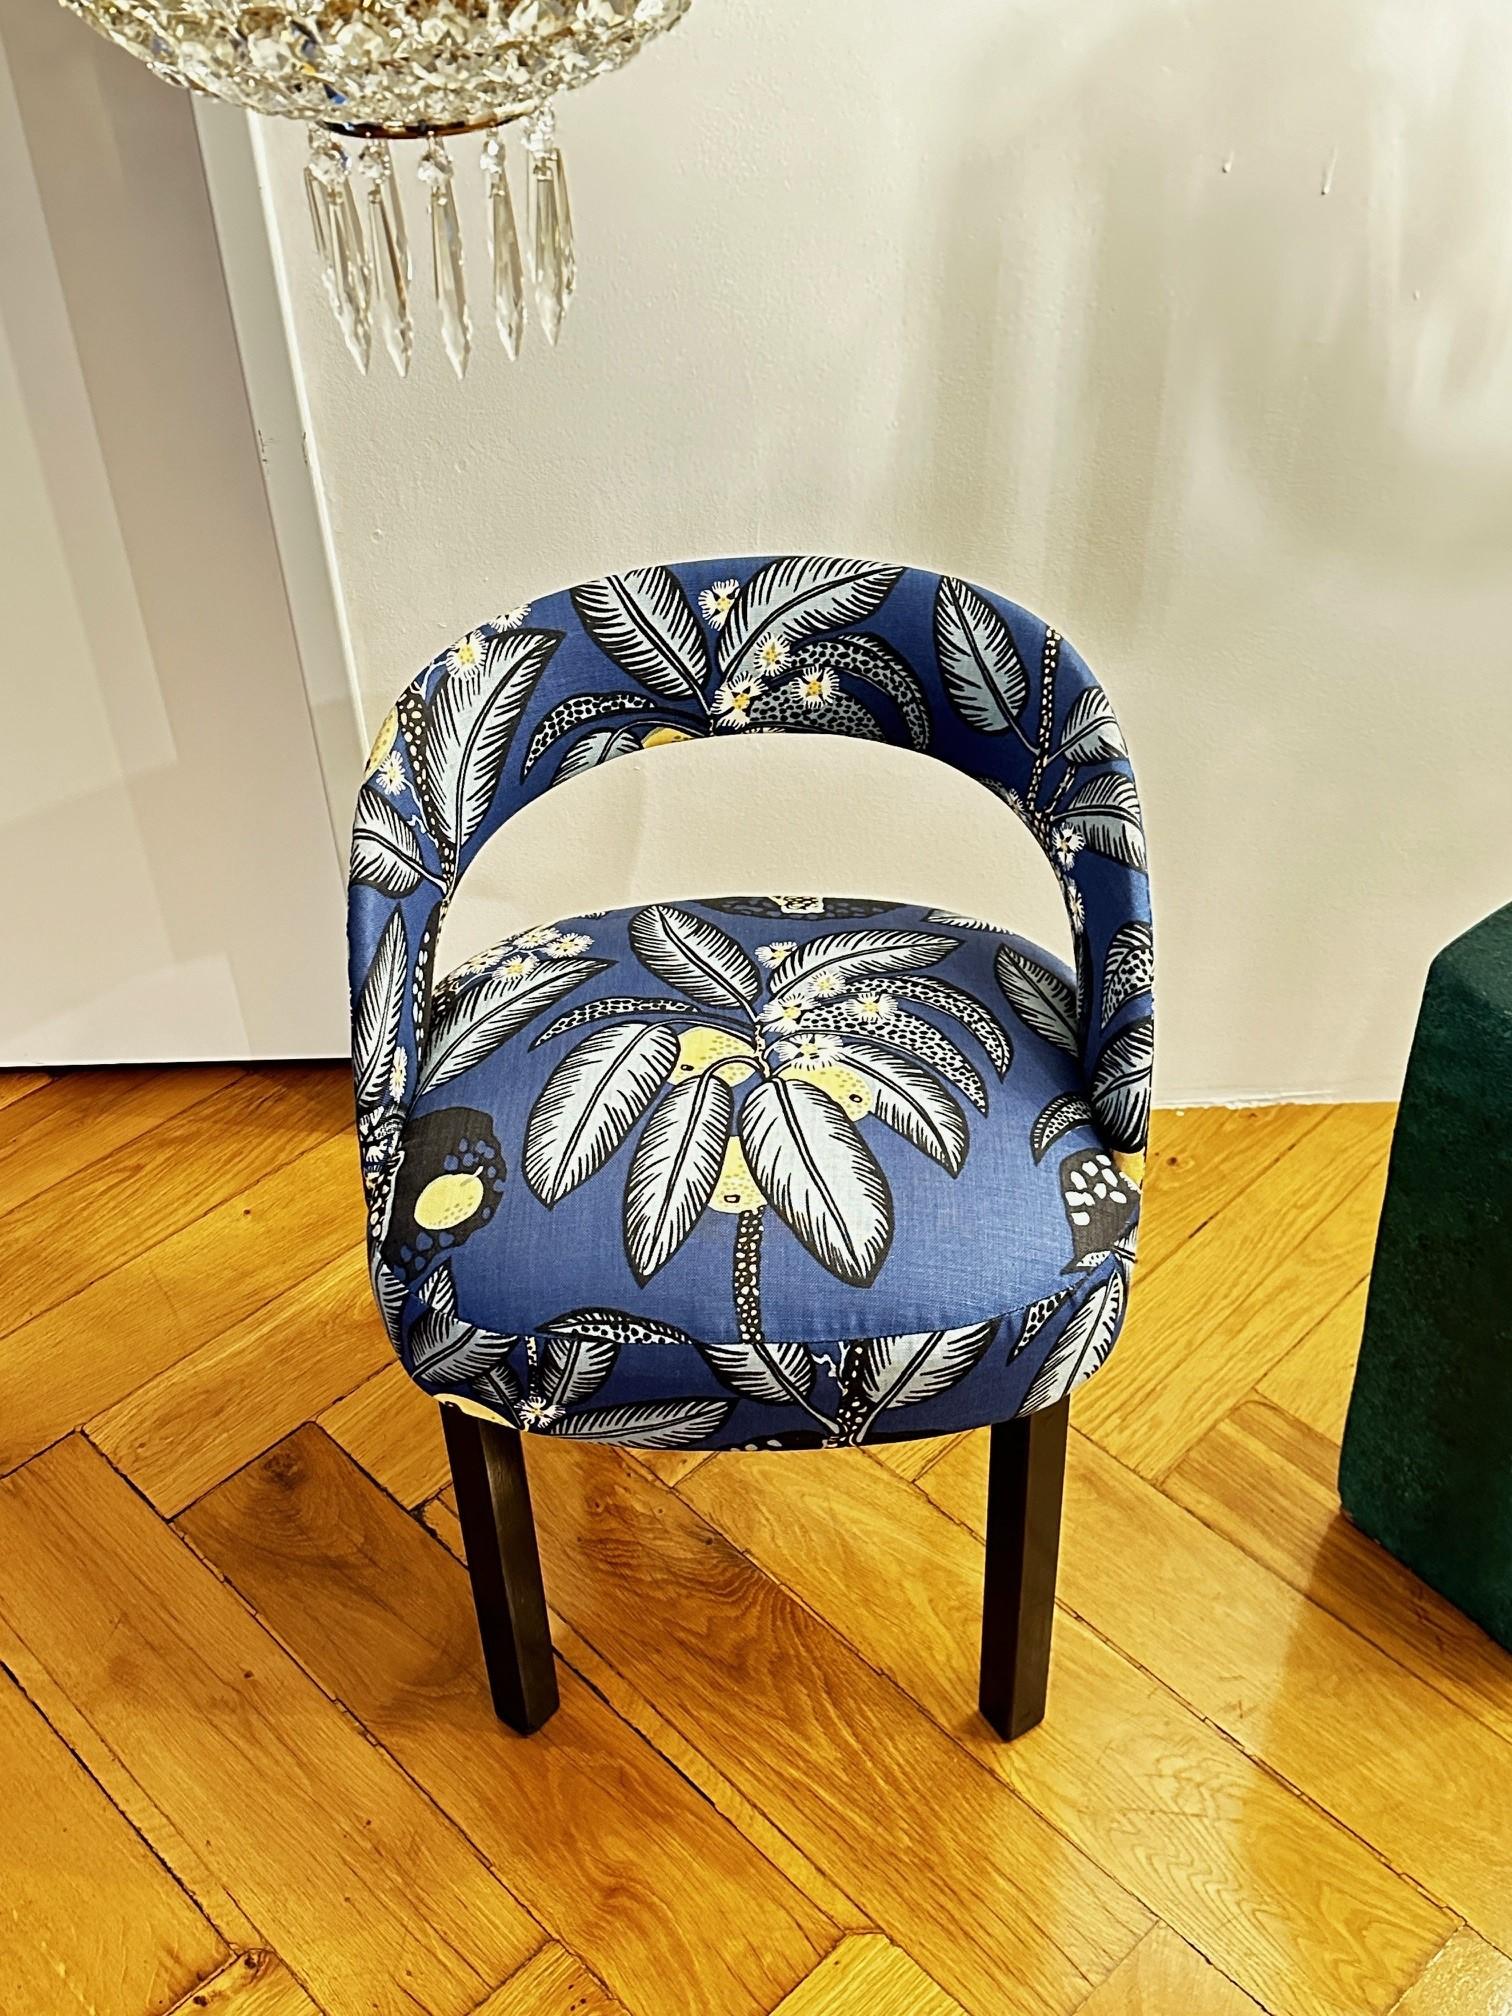 Two Original J.Hoffmann Oswald Haerdtl Chairs Art Deco New Fabric by Josef Frank For Sale 1